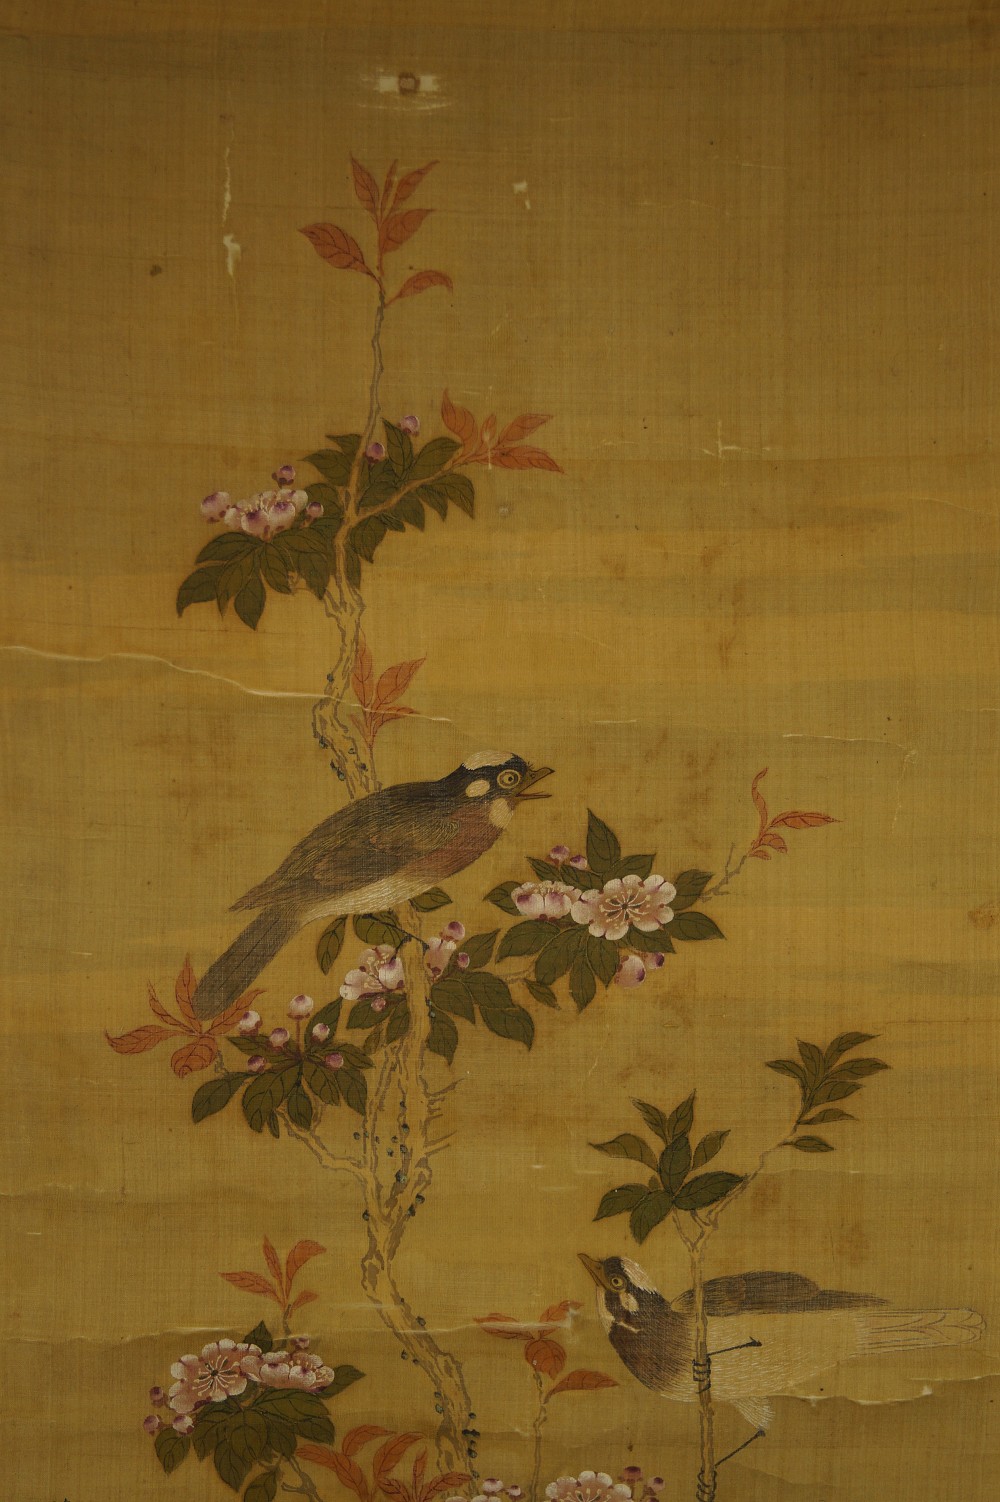 Vögel und Blumen - Japanisches Rollbild (Kakejiku, Kakemono)